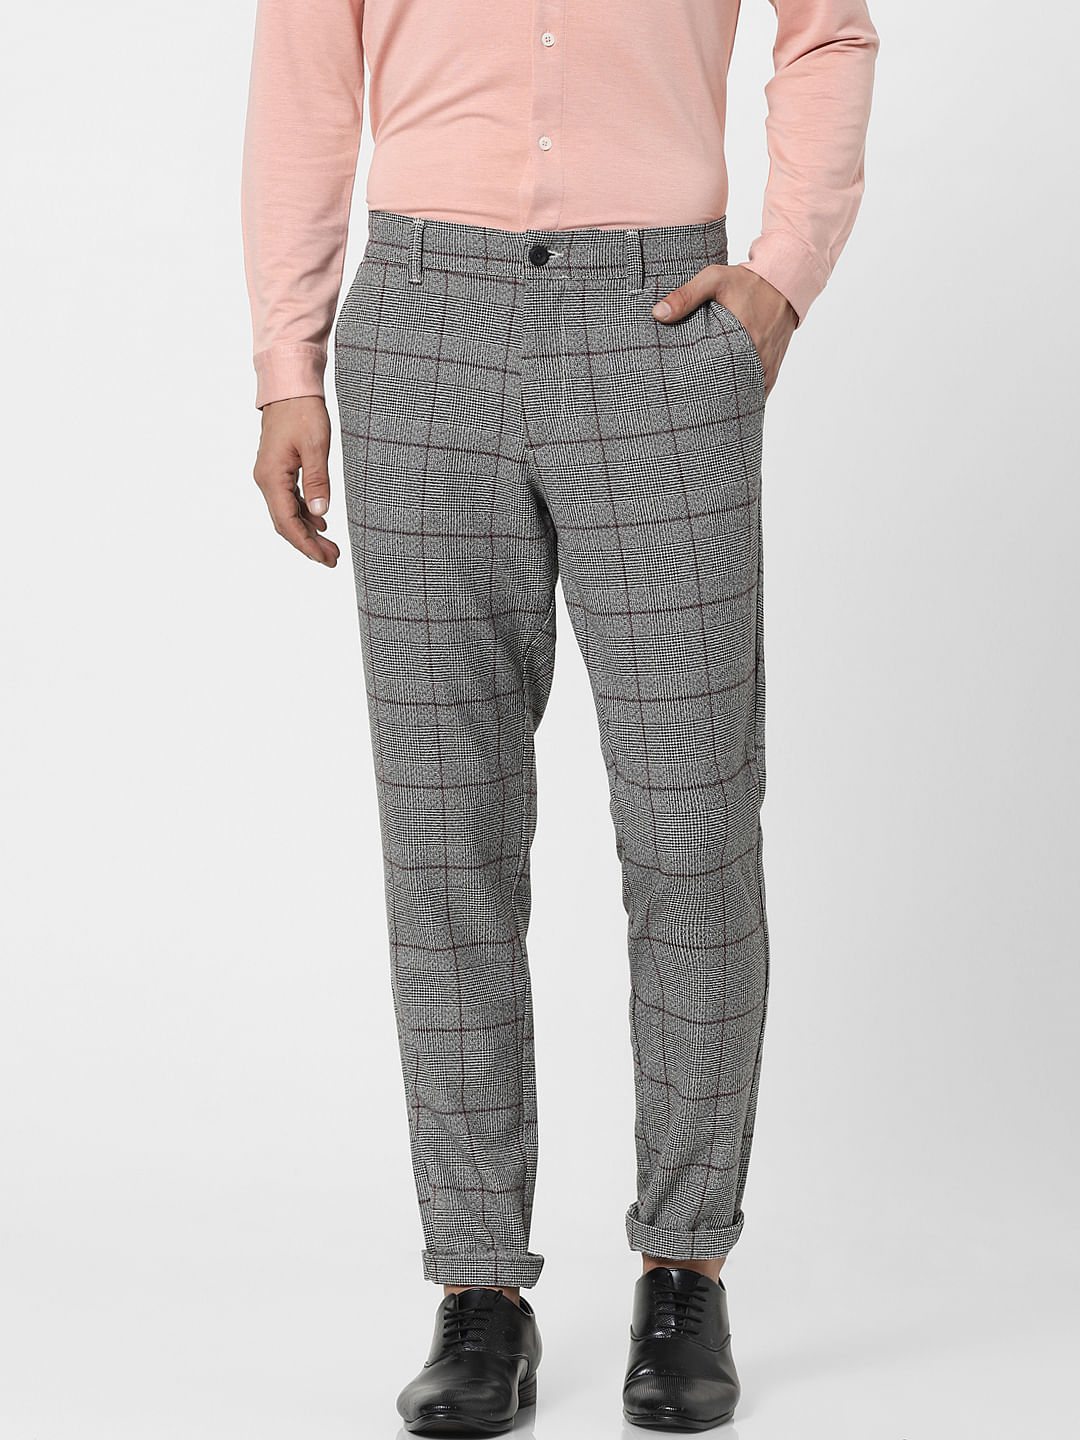 Mens Grey Checkered Pants  Buy Checked Pants  La Haute  la haute couture